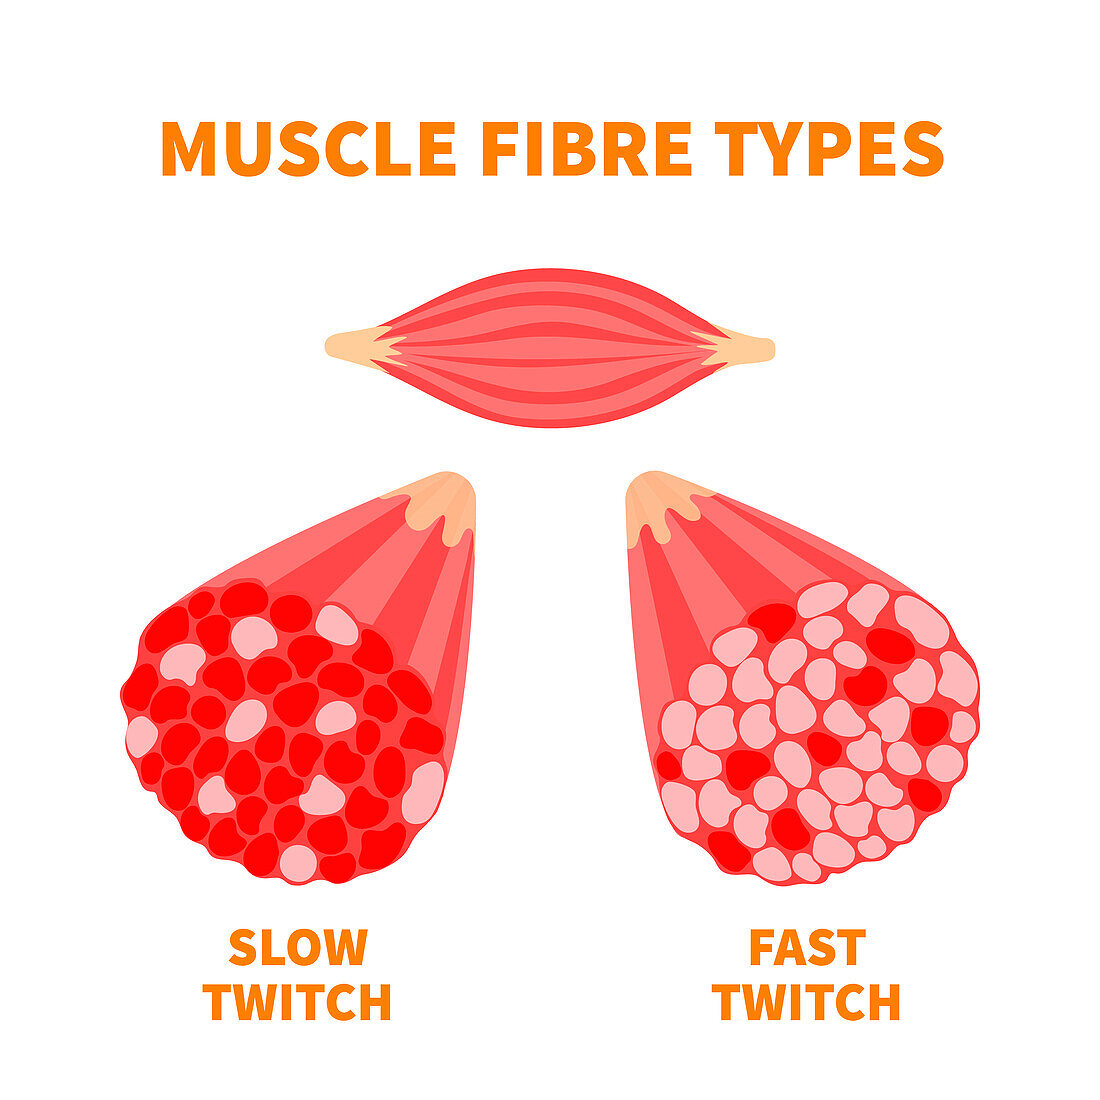 Muscle fibre types, illustration